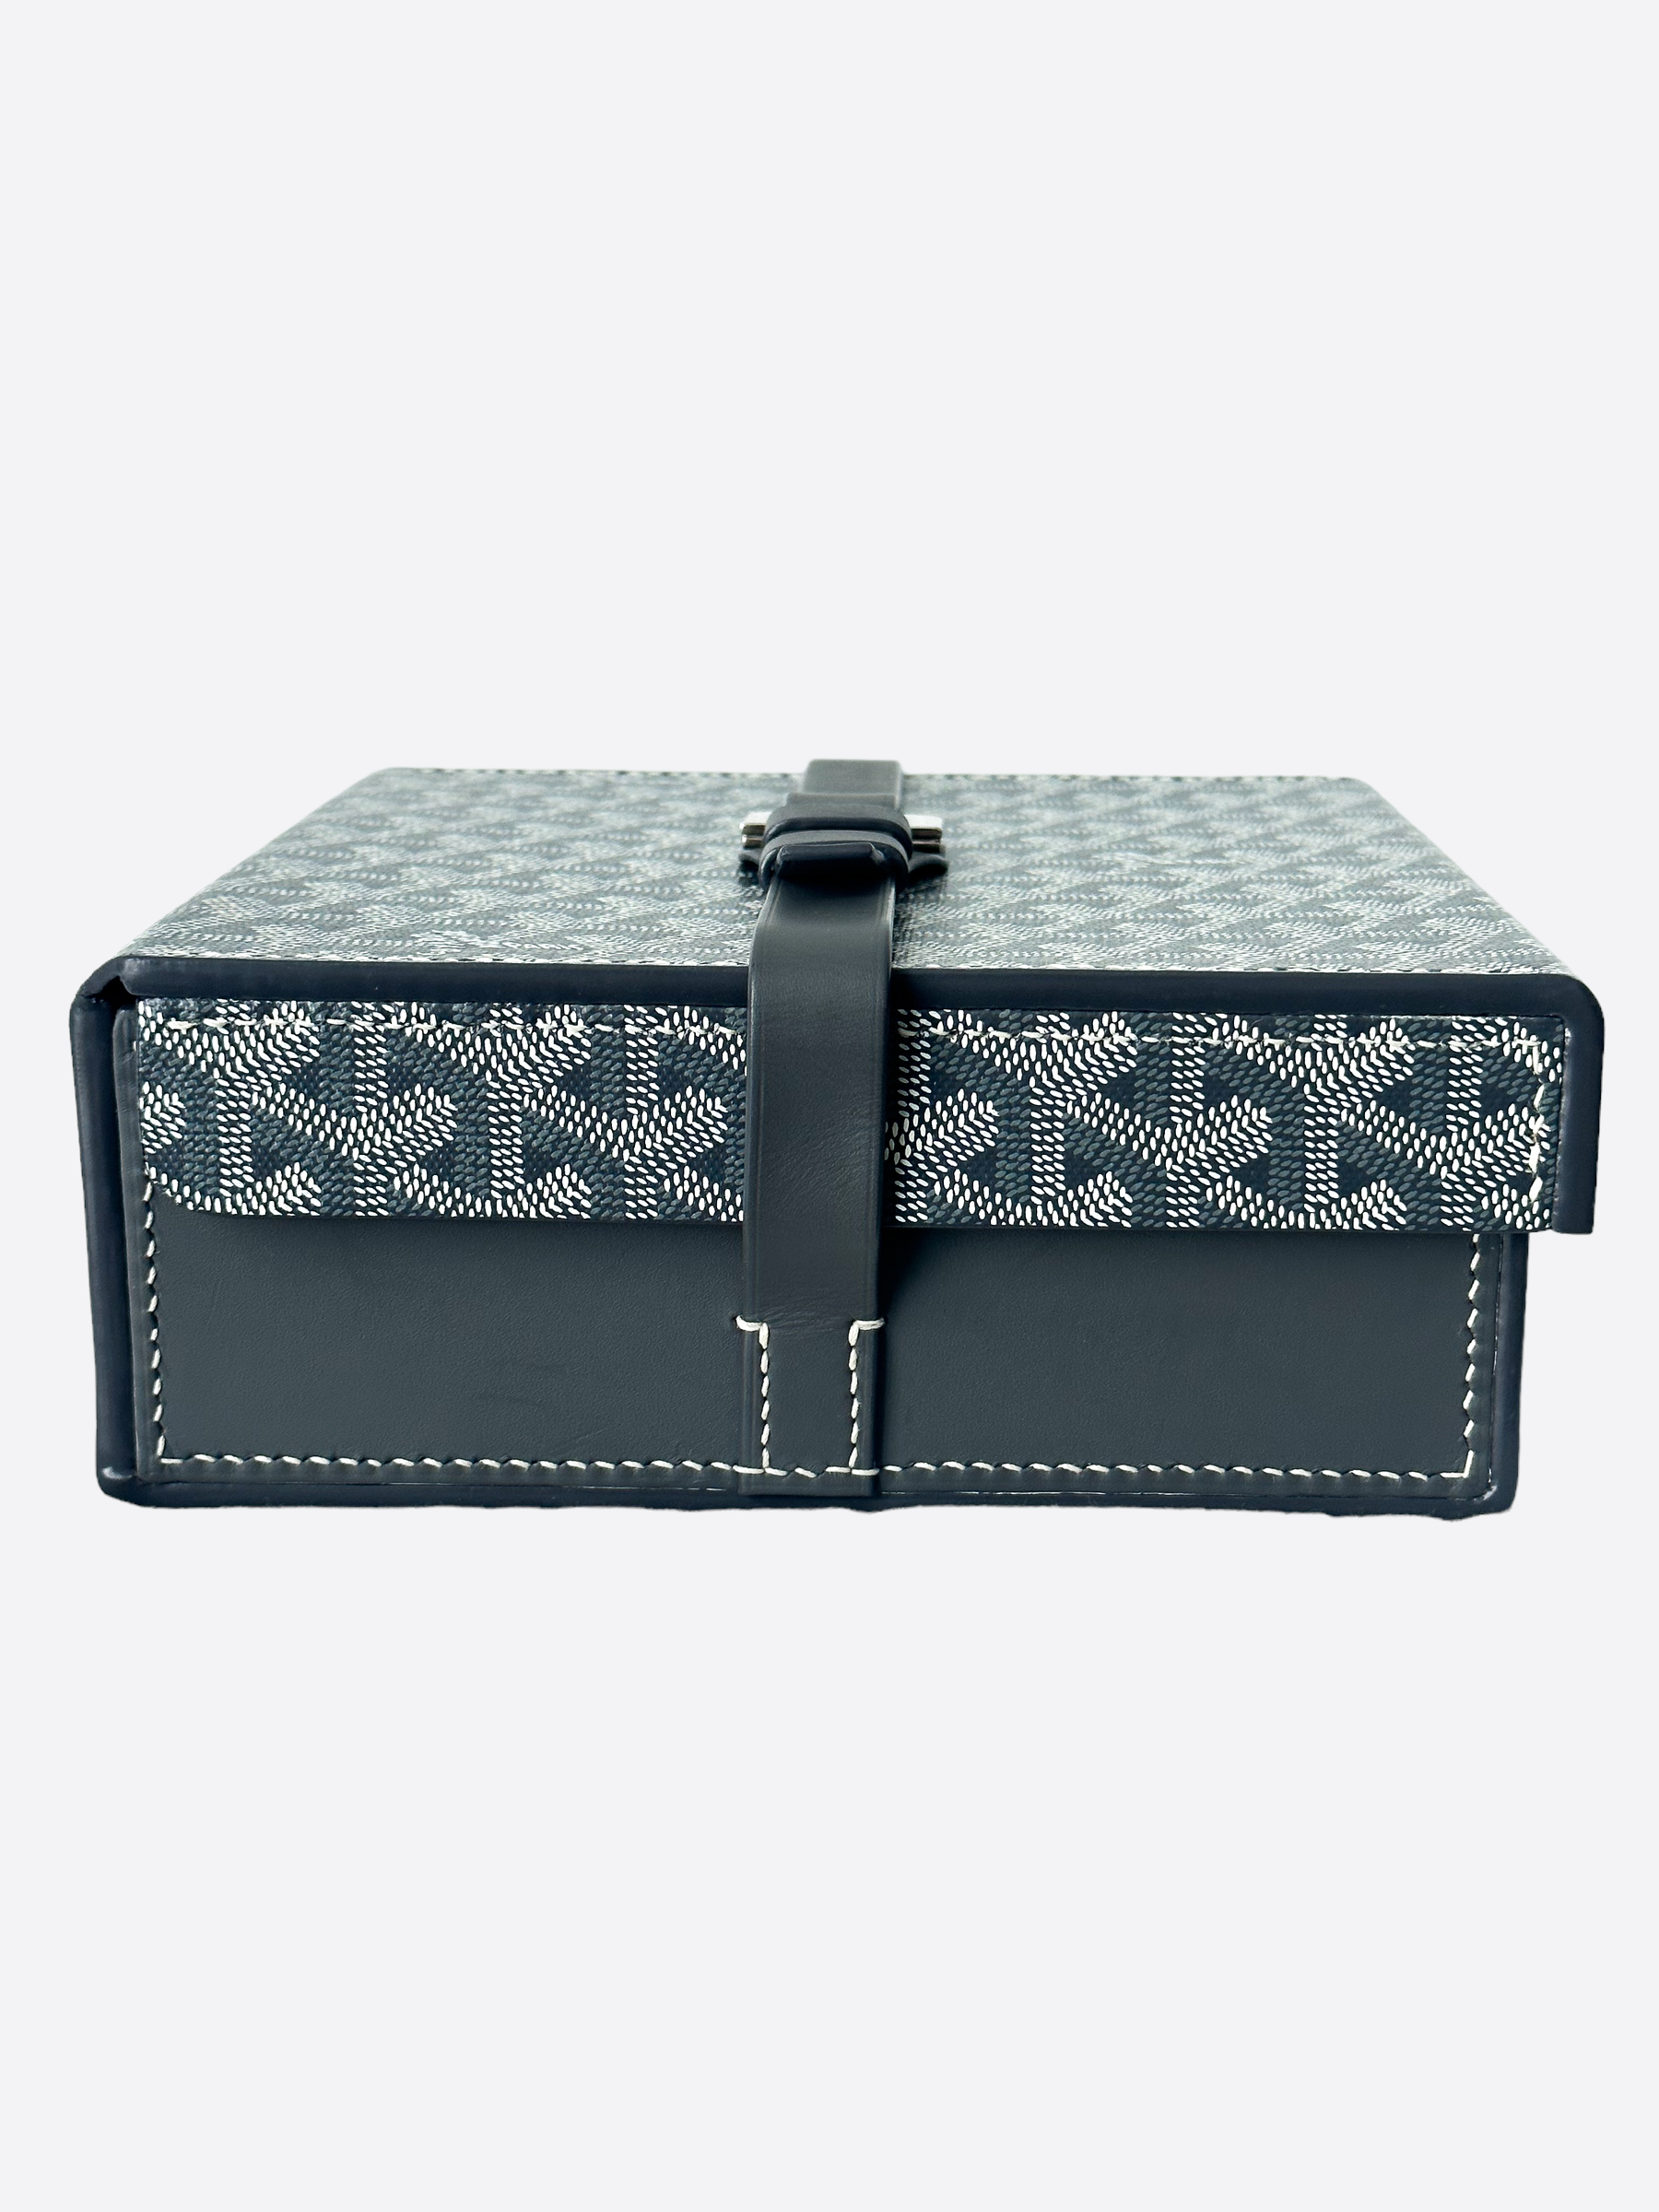 BRAND NEW Louis Vuitton Watch Box + Accessories